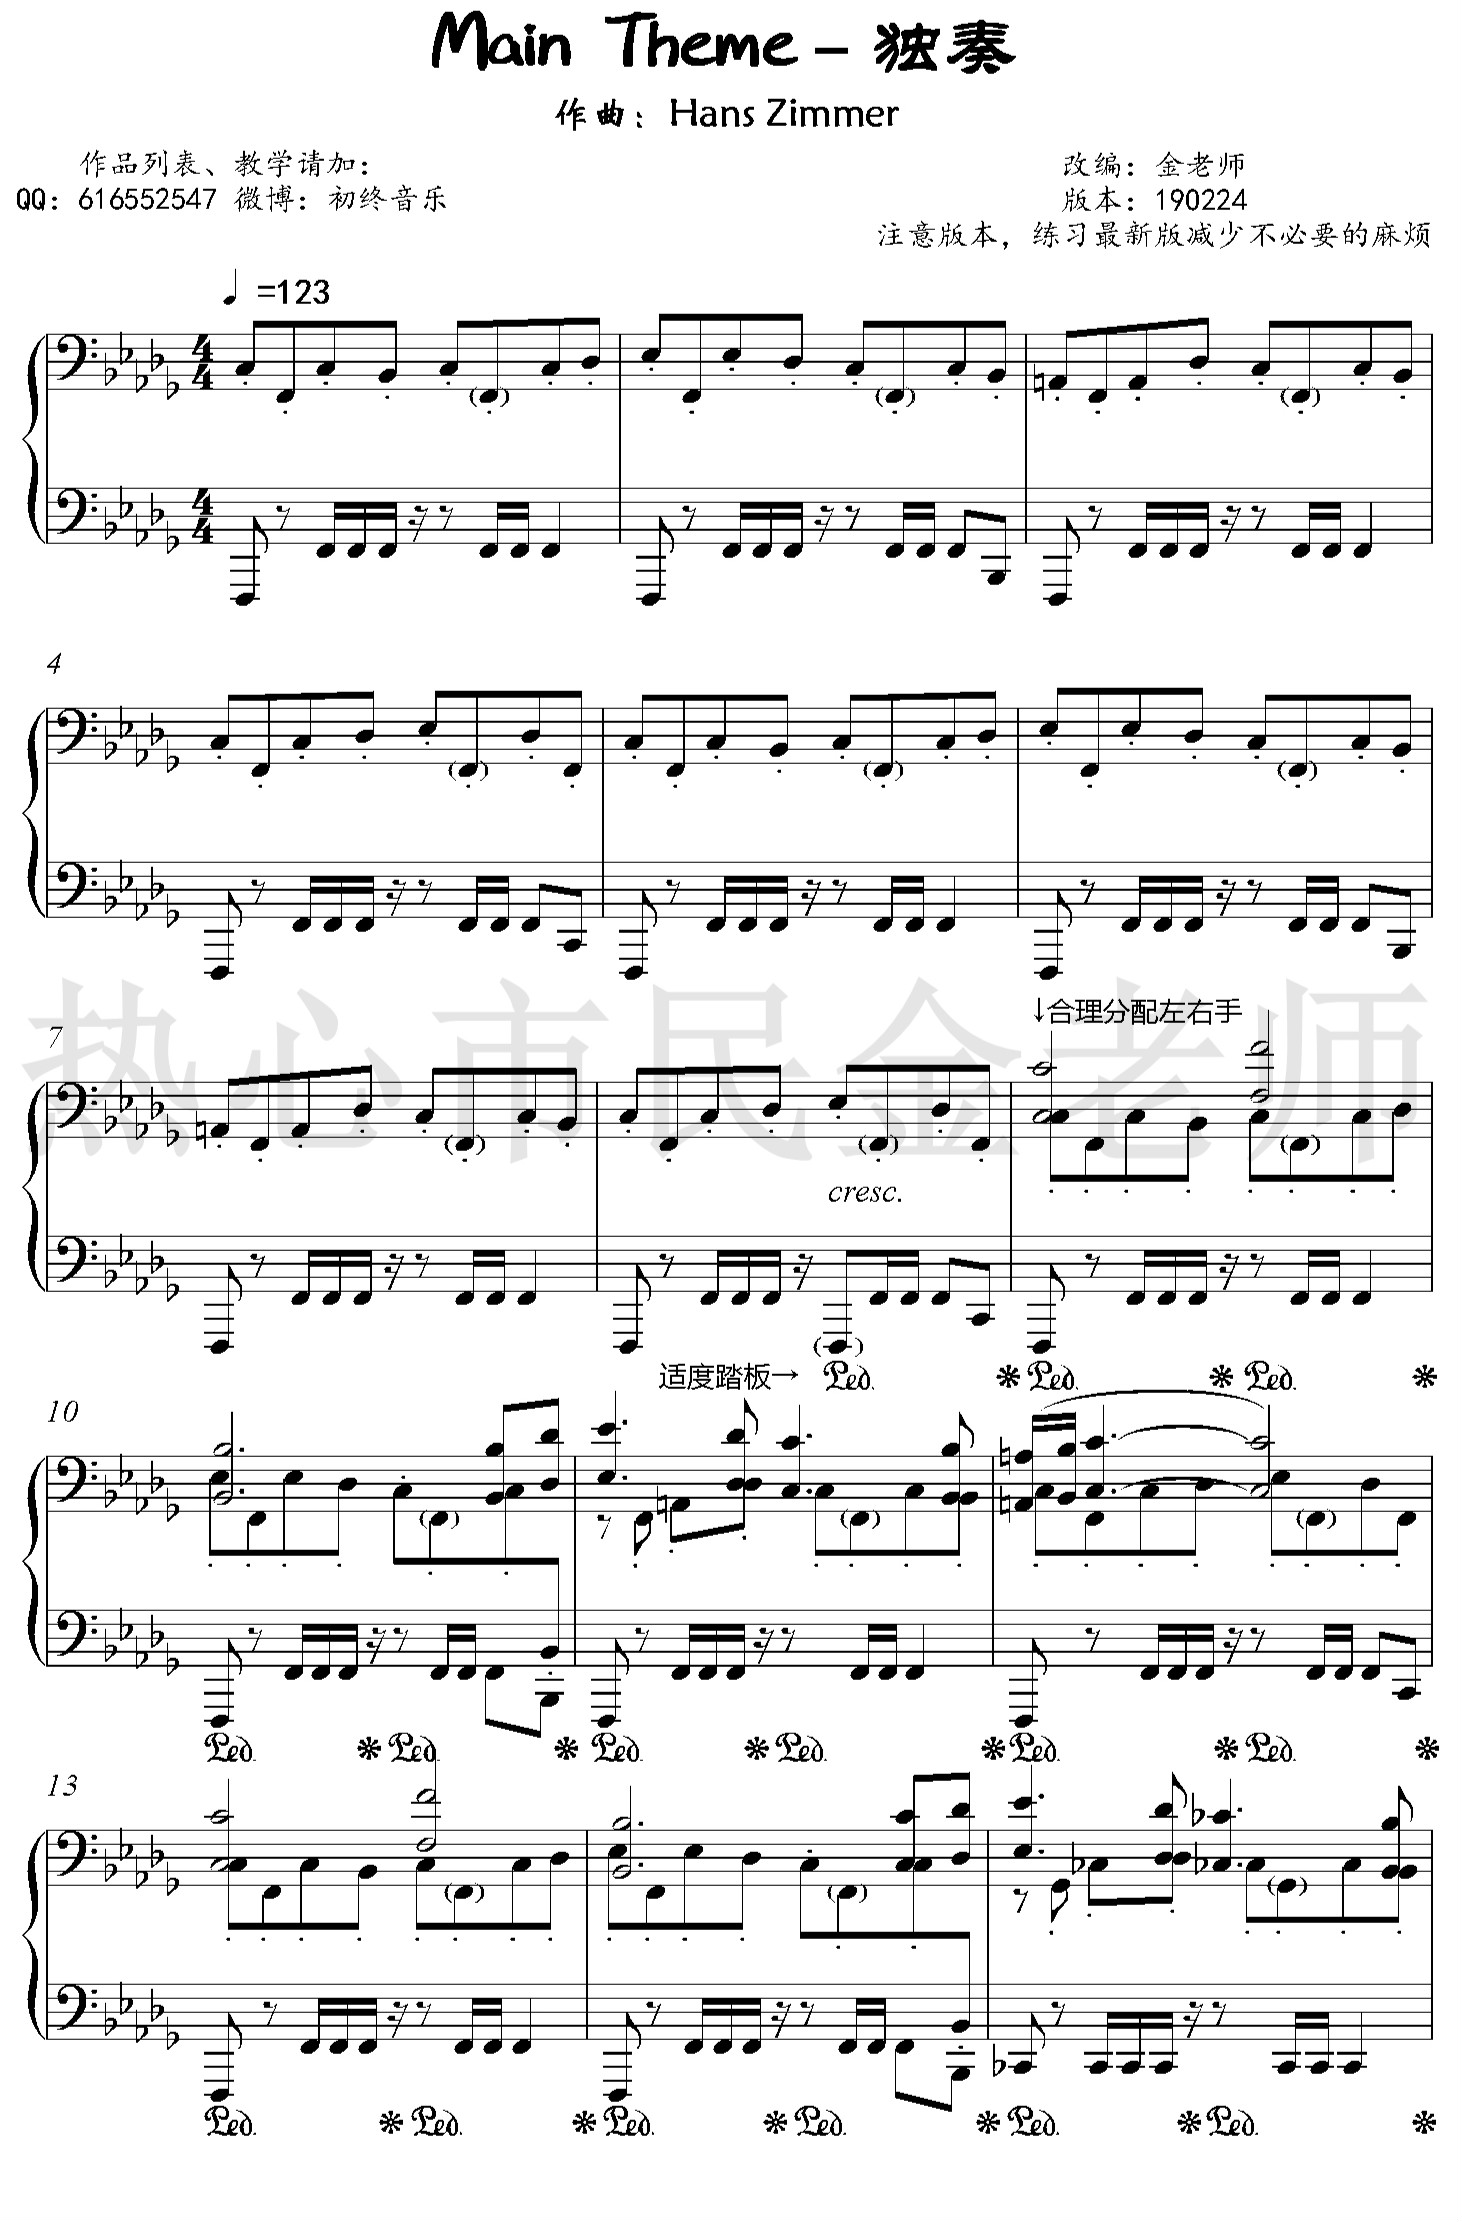 Main Theme钢琴谱(王者荣耀主题曲）-金老师独奏1902242